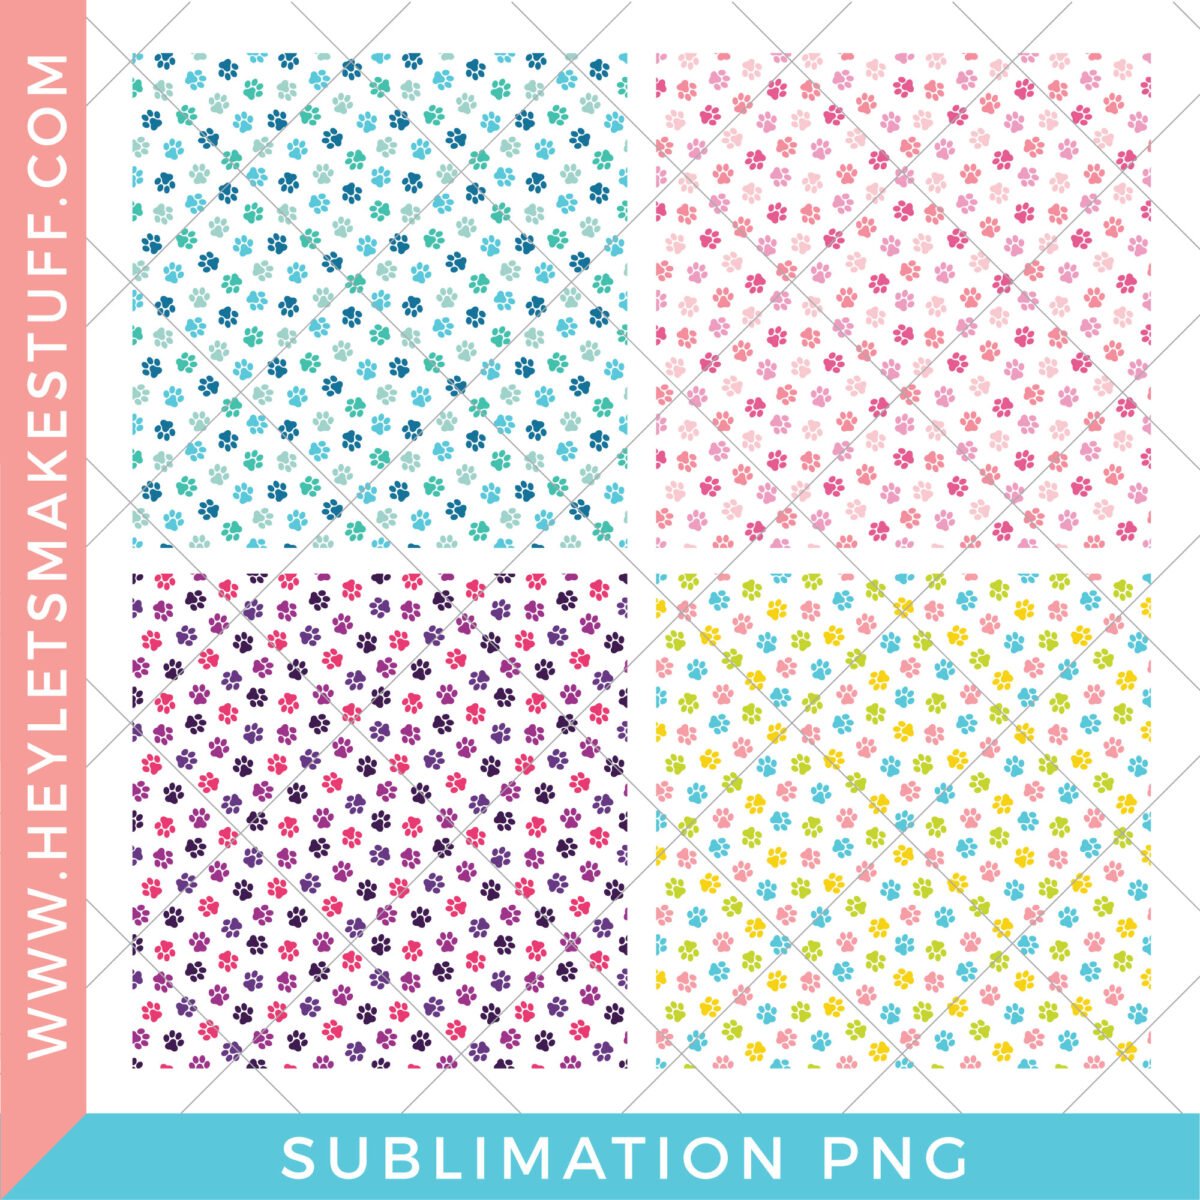 Sublimation paw print designs